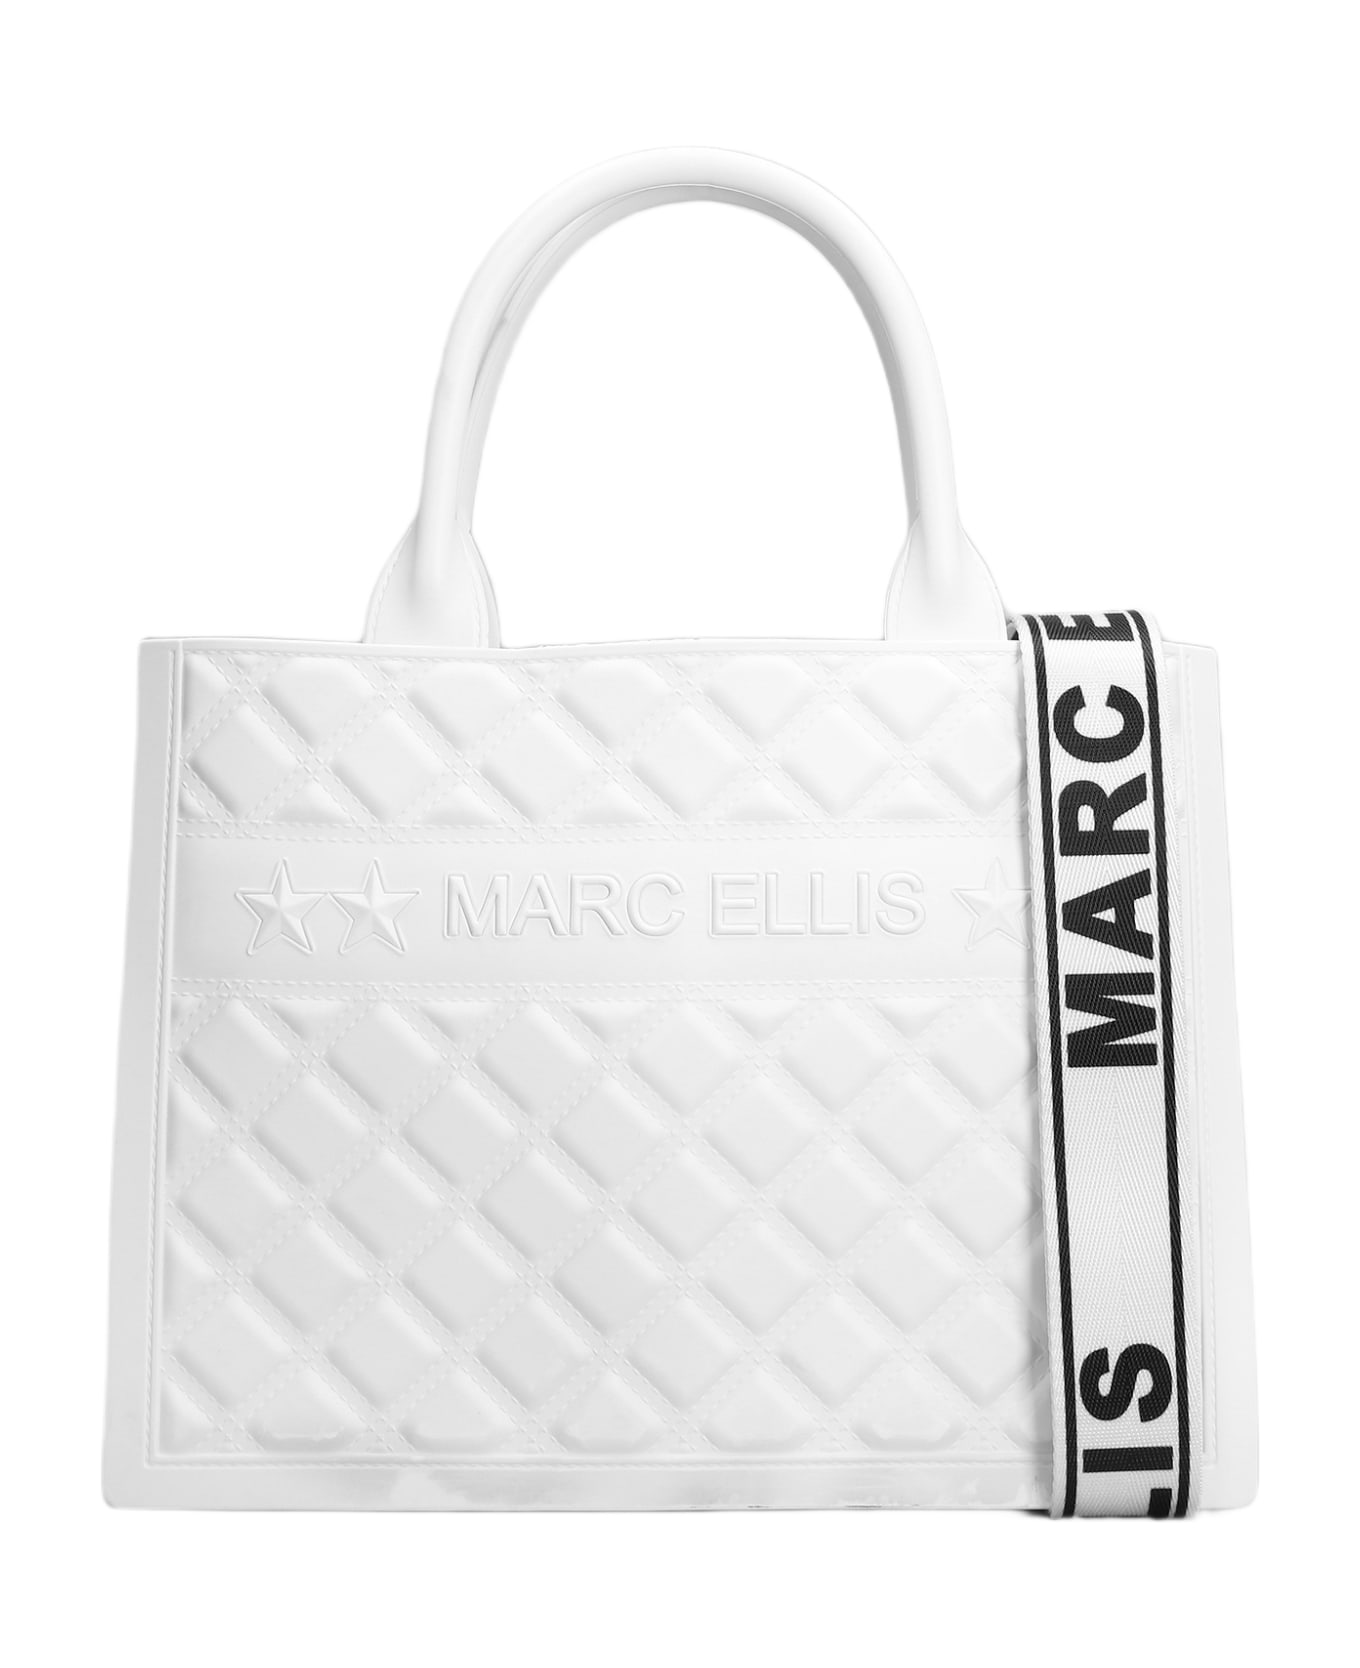 Marc Ellis Flat Buby M Shoulder Bag In White Pvc - white